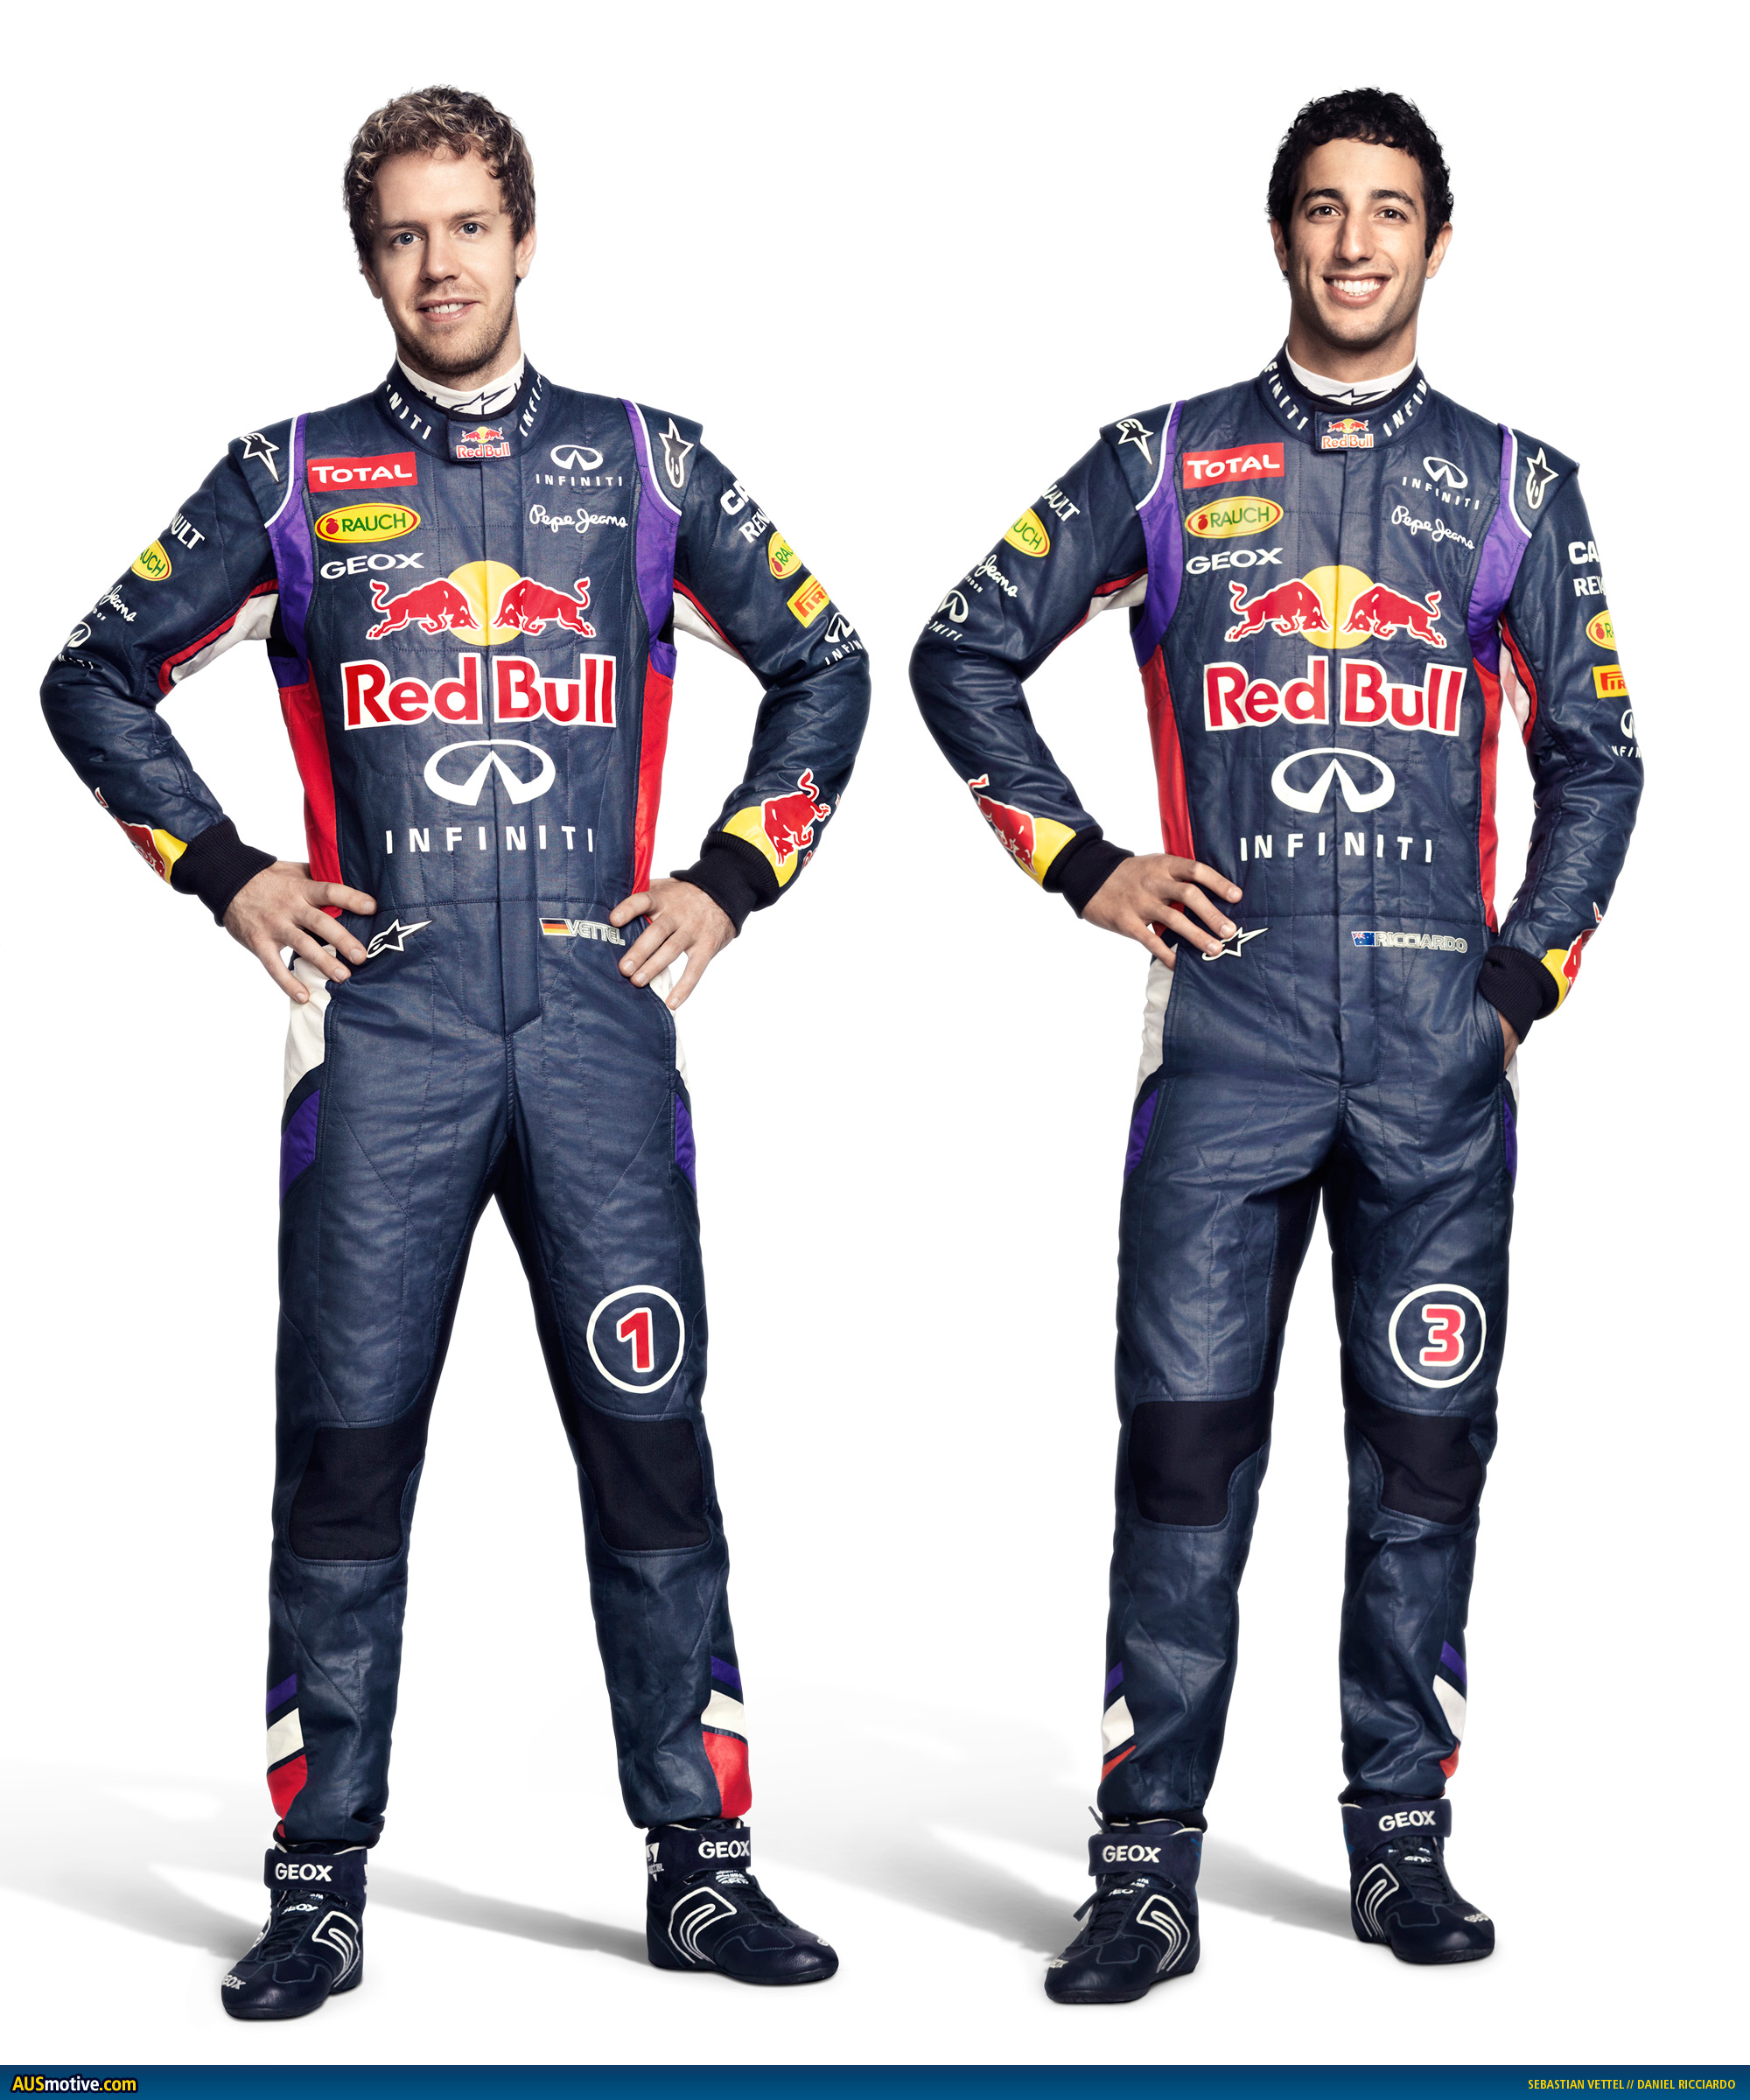 2014 Red Bull Racing RB10 revealed – AUSmotive.com